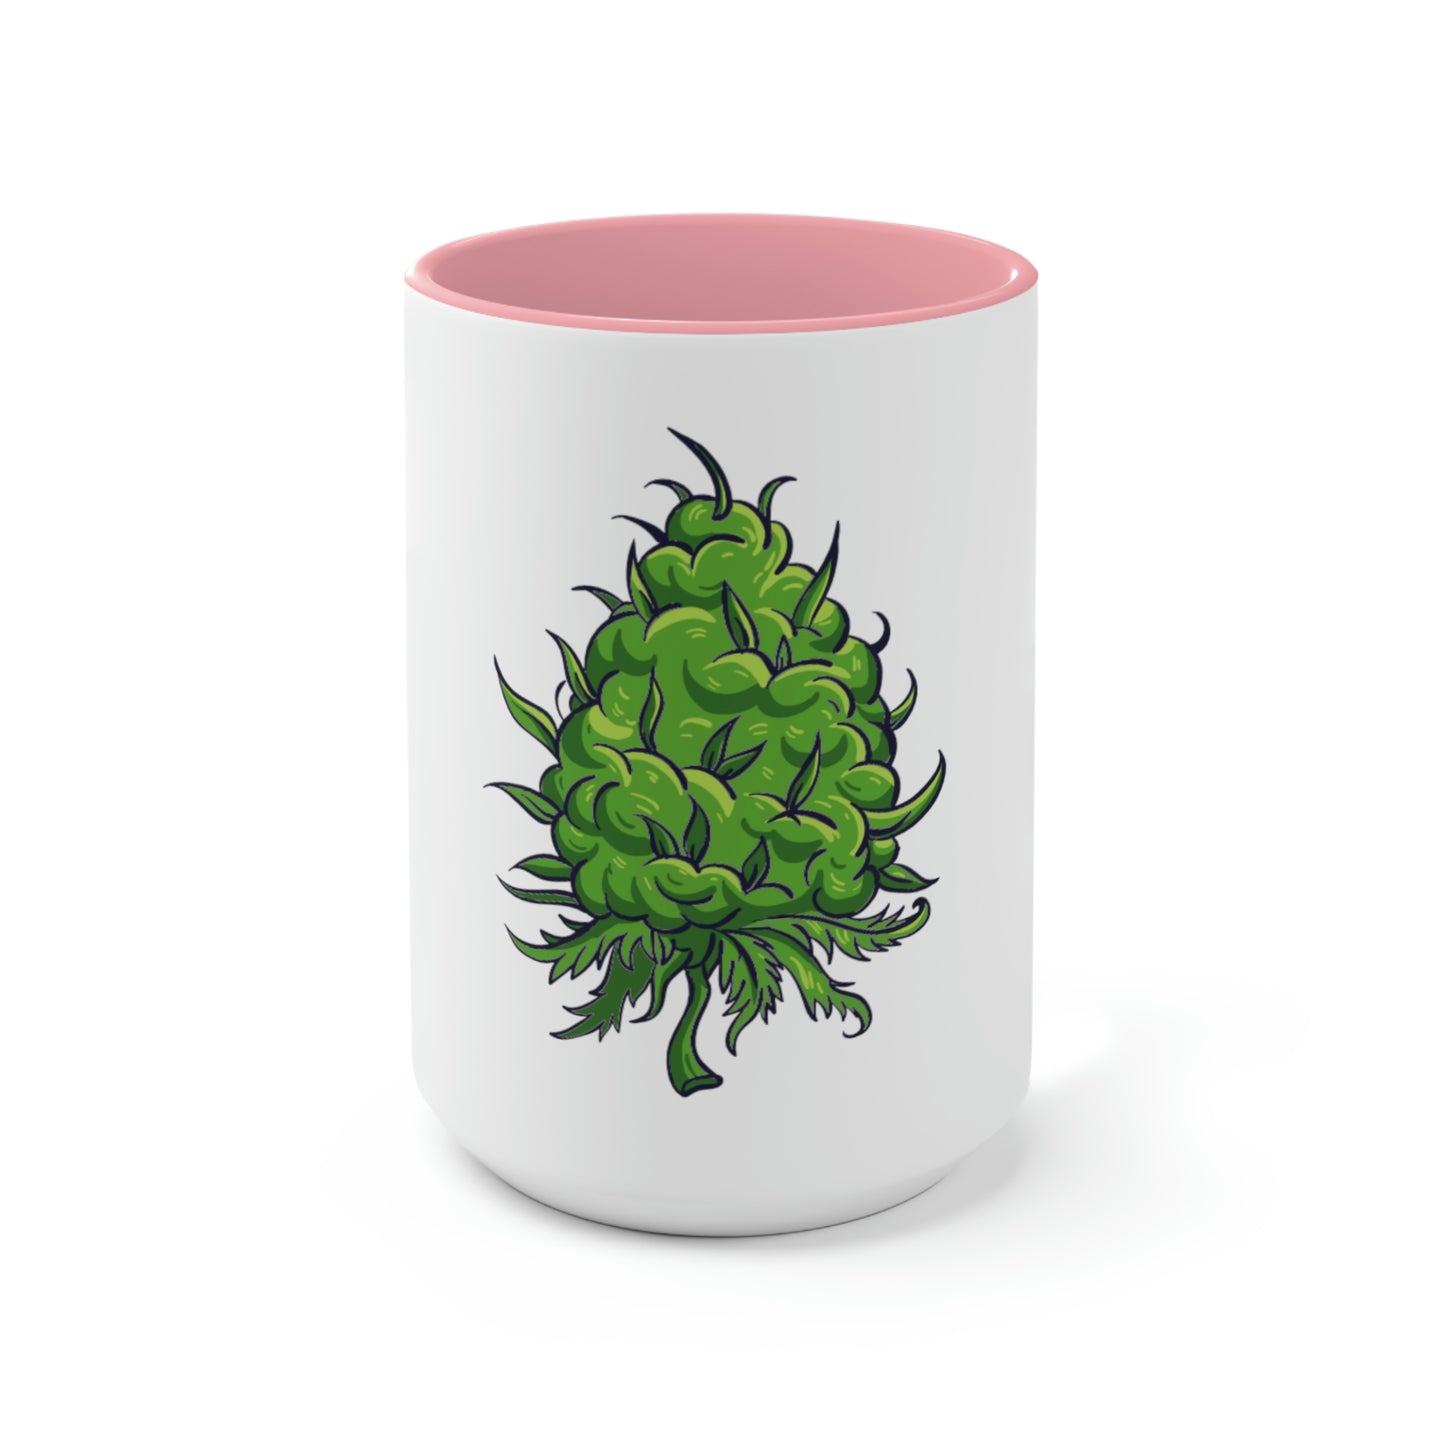 a white and pink Big Cannabis Nug Coffee Mug with a green marijuana plant on it.